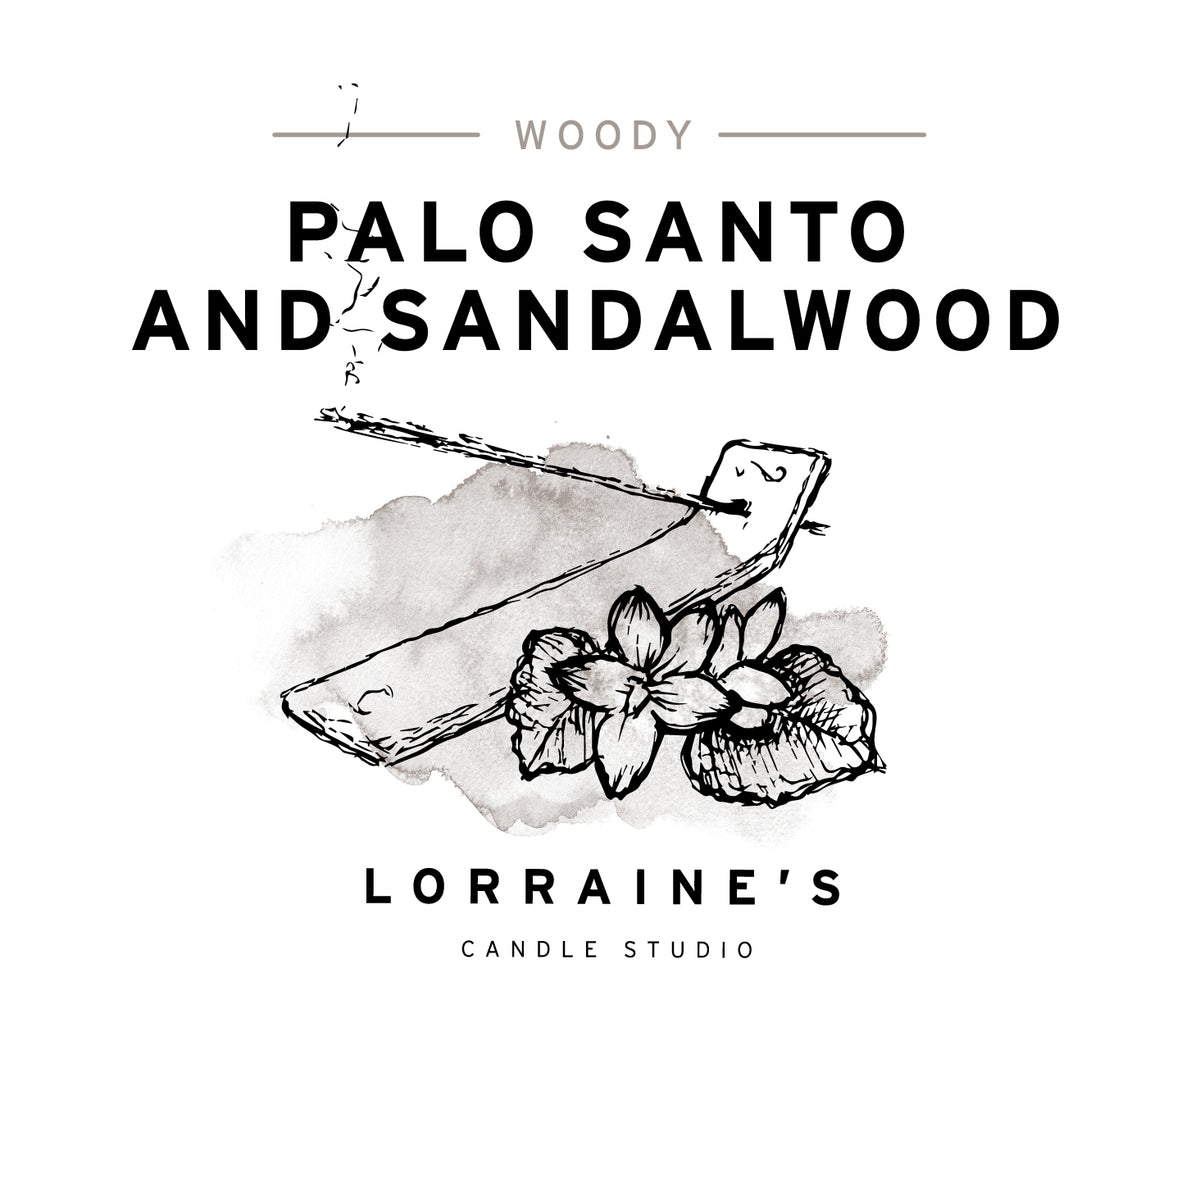 Palo Santo and Sandalwood